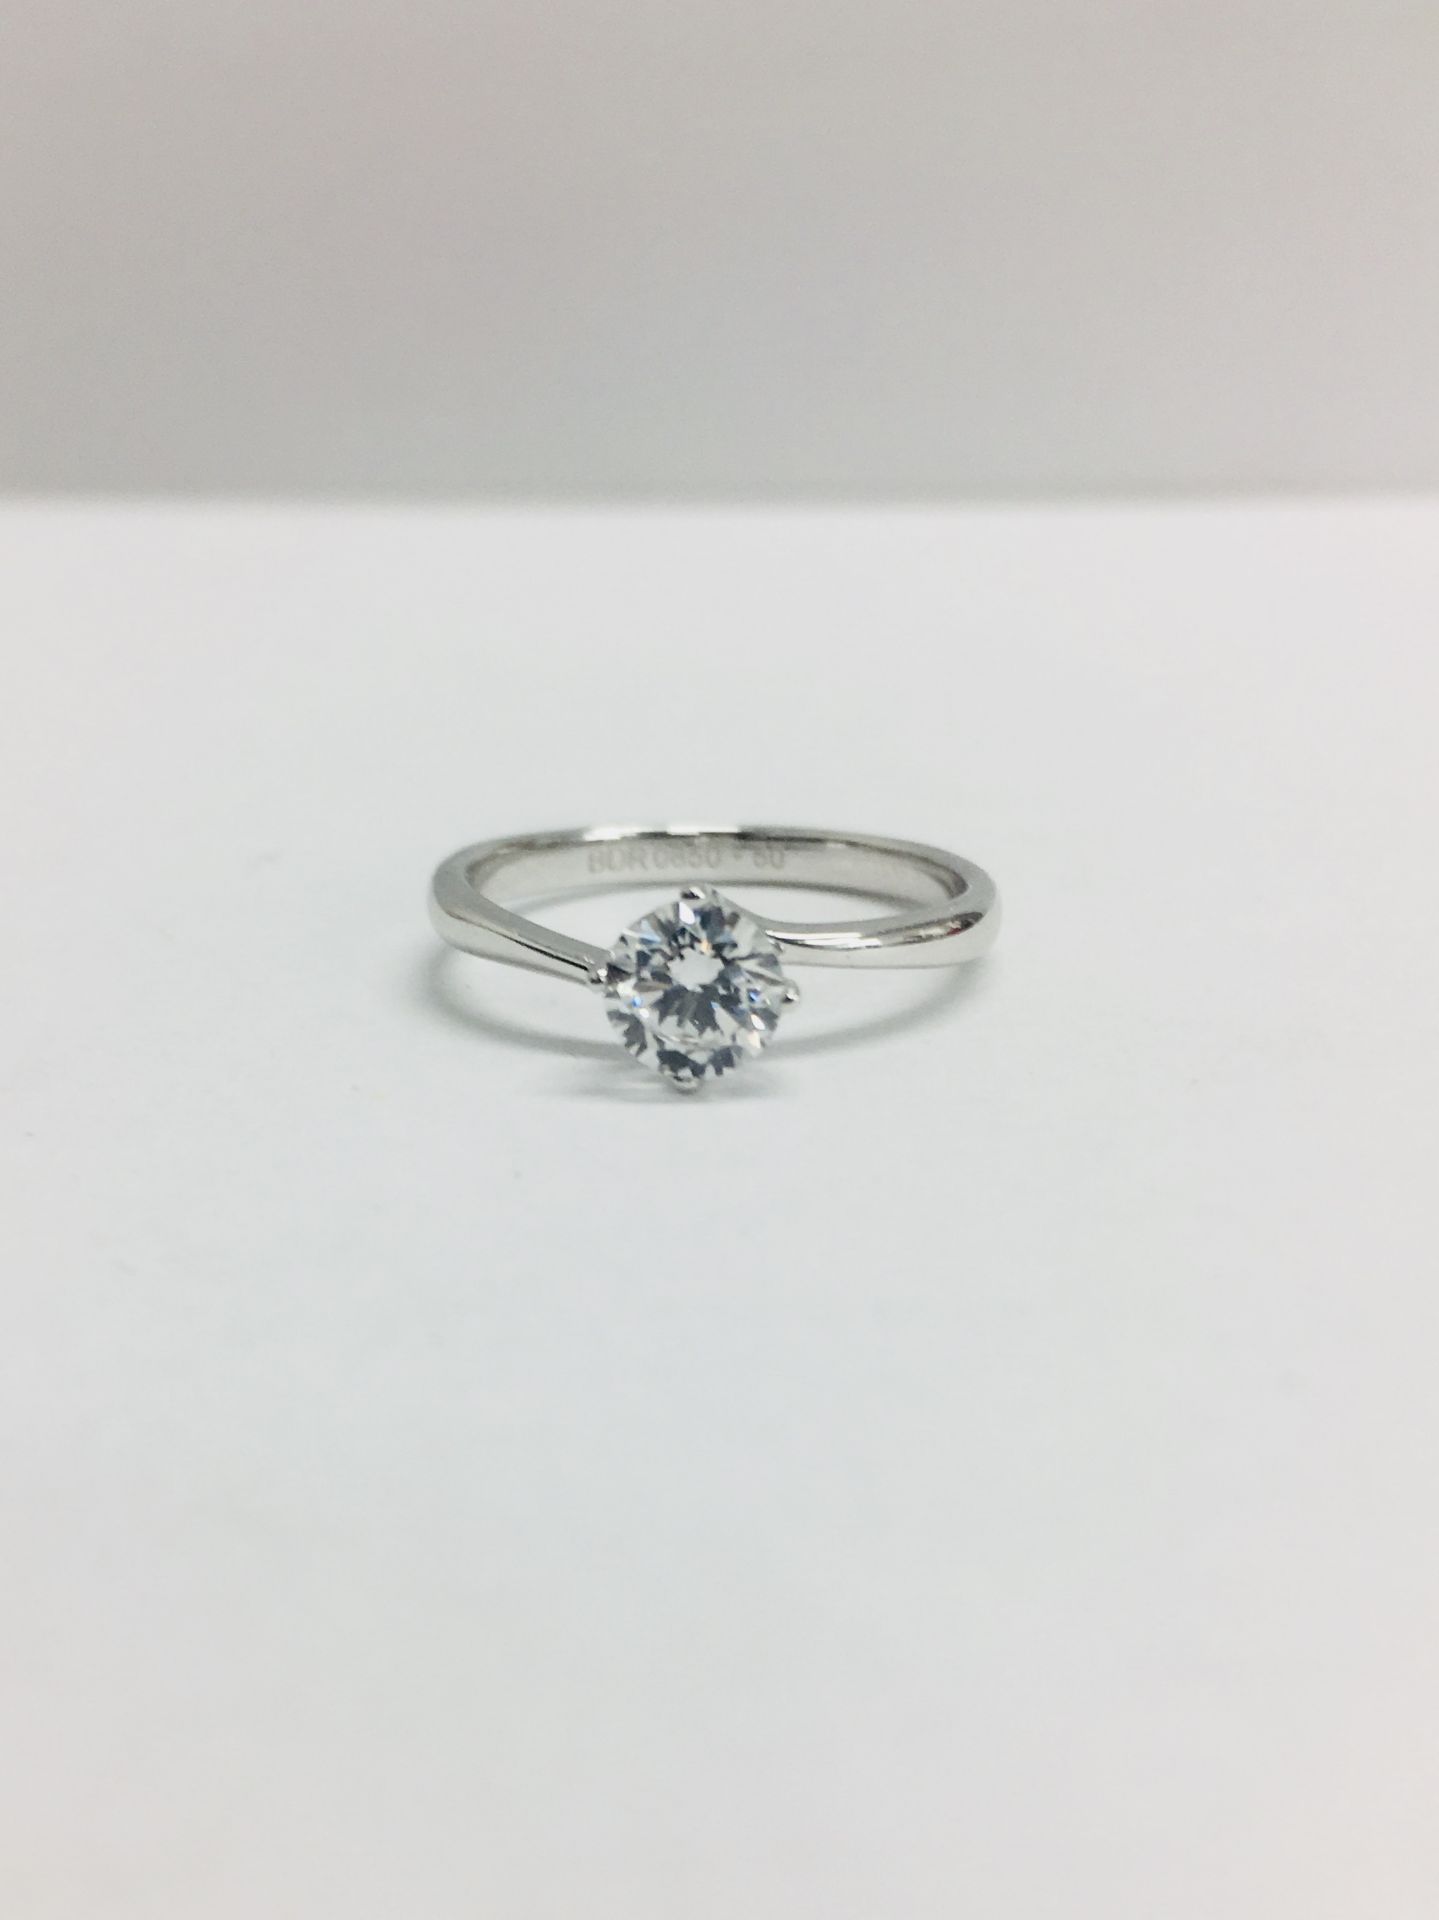 Platinum diamond twist style solitaire ring,0.50ct diamond D colour vs clarity,3.28gms platinum